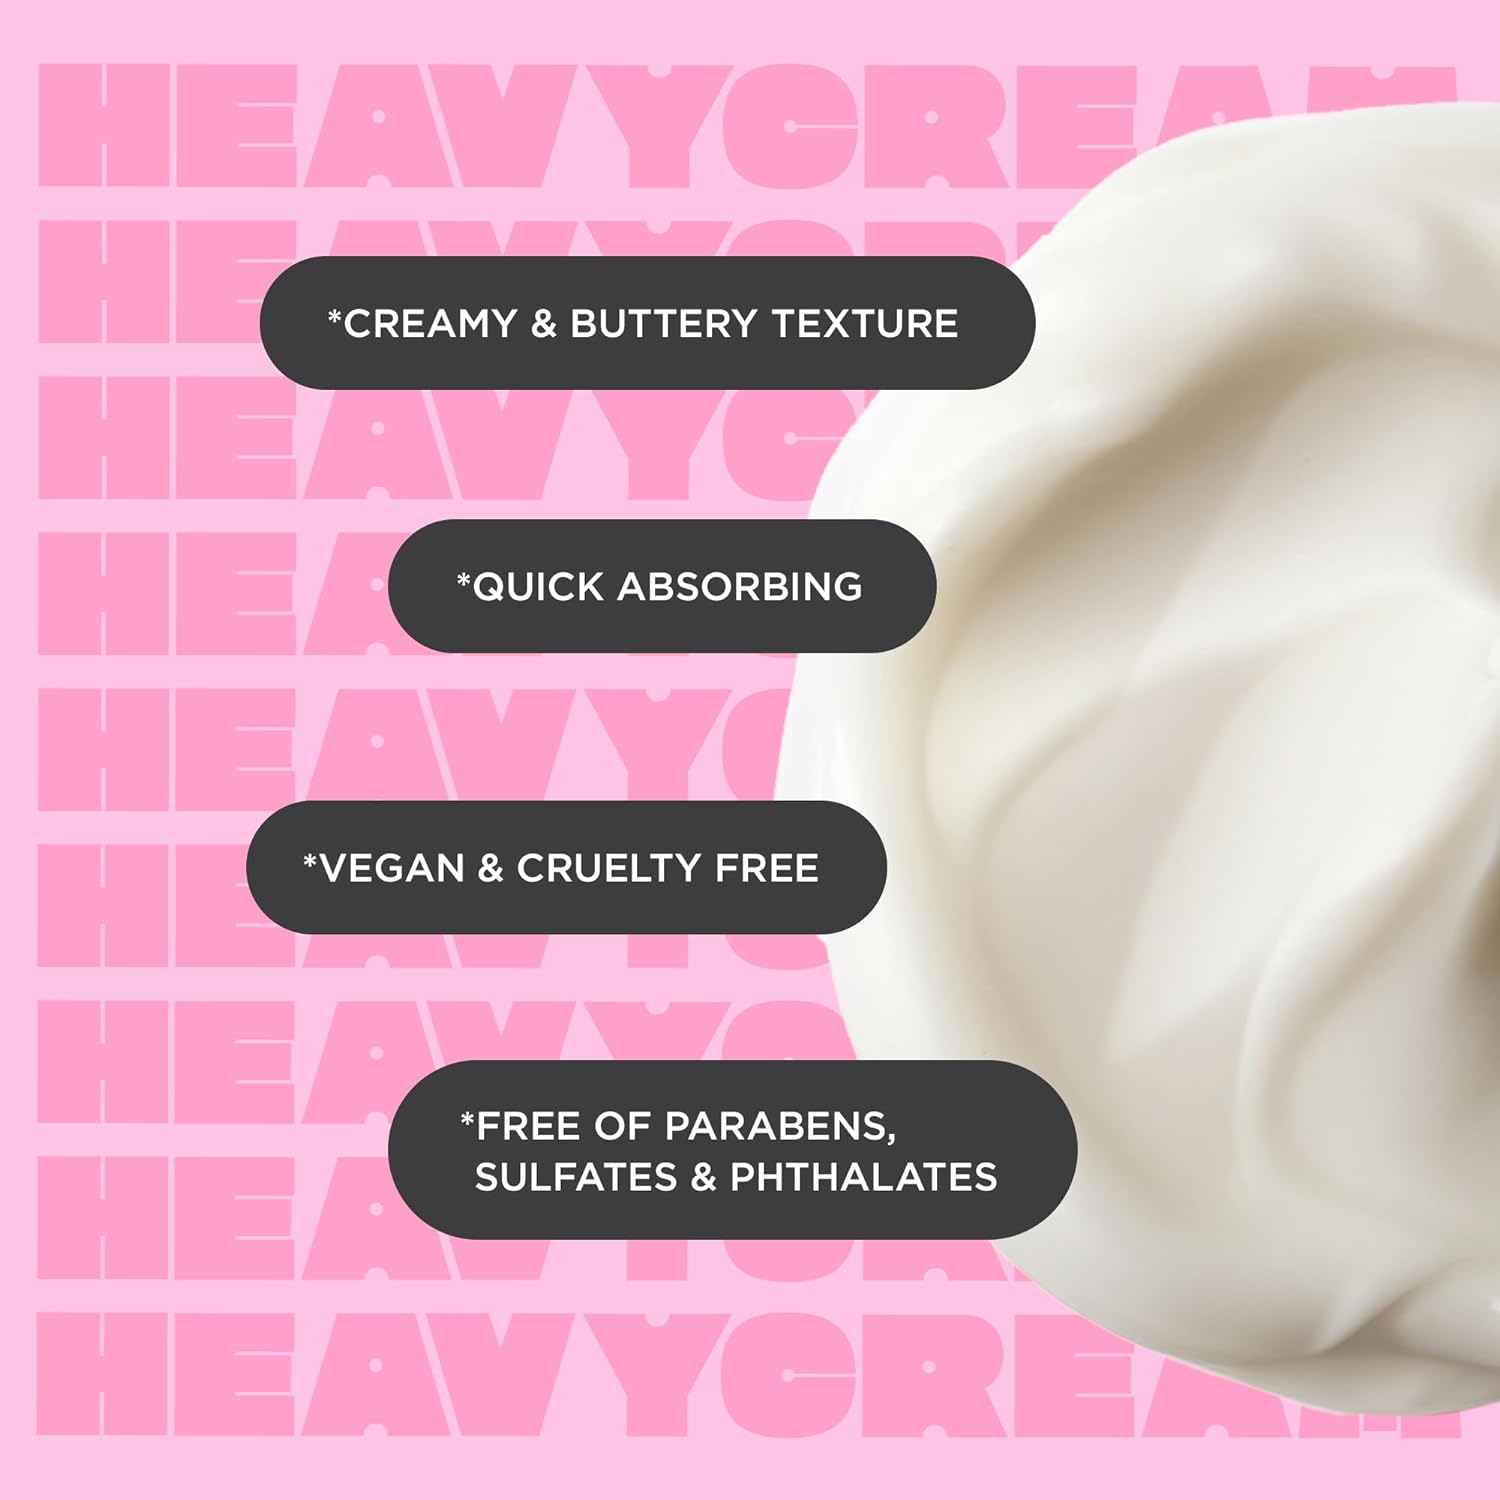 Cake Beauty Vegan Body Lotion for Dry Skin - Oat Milk, Shea Butter & Aloe Vera - 7 Ounce : Beauty & Personal Care